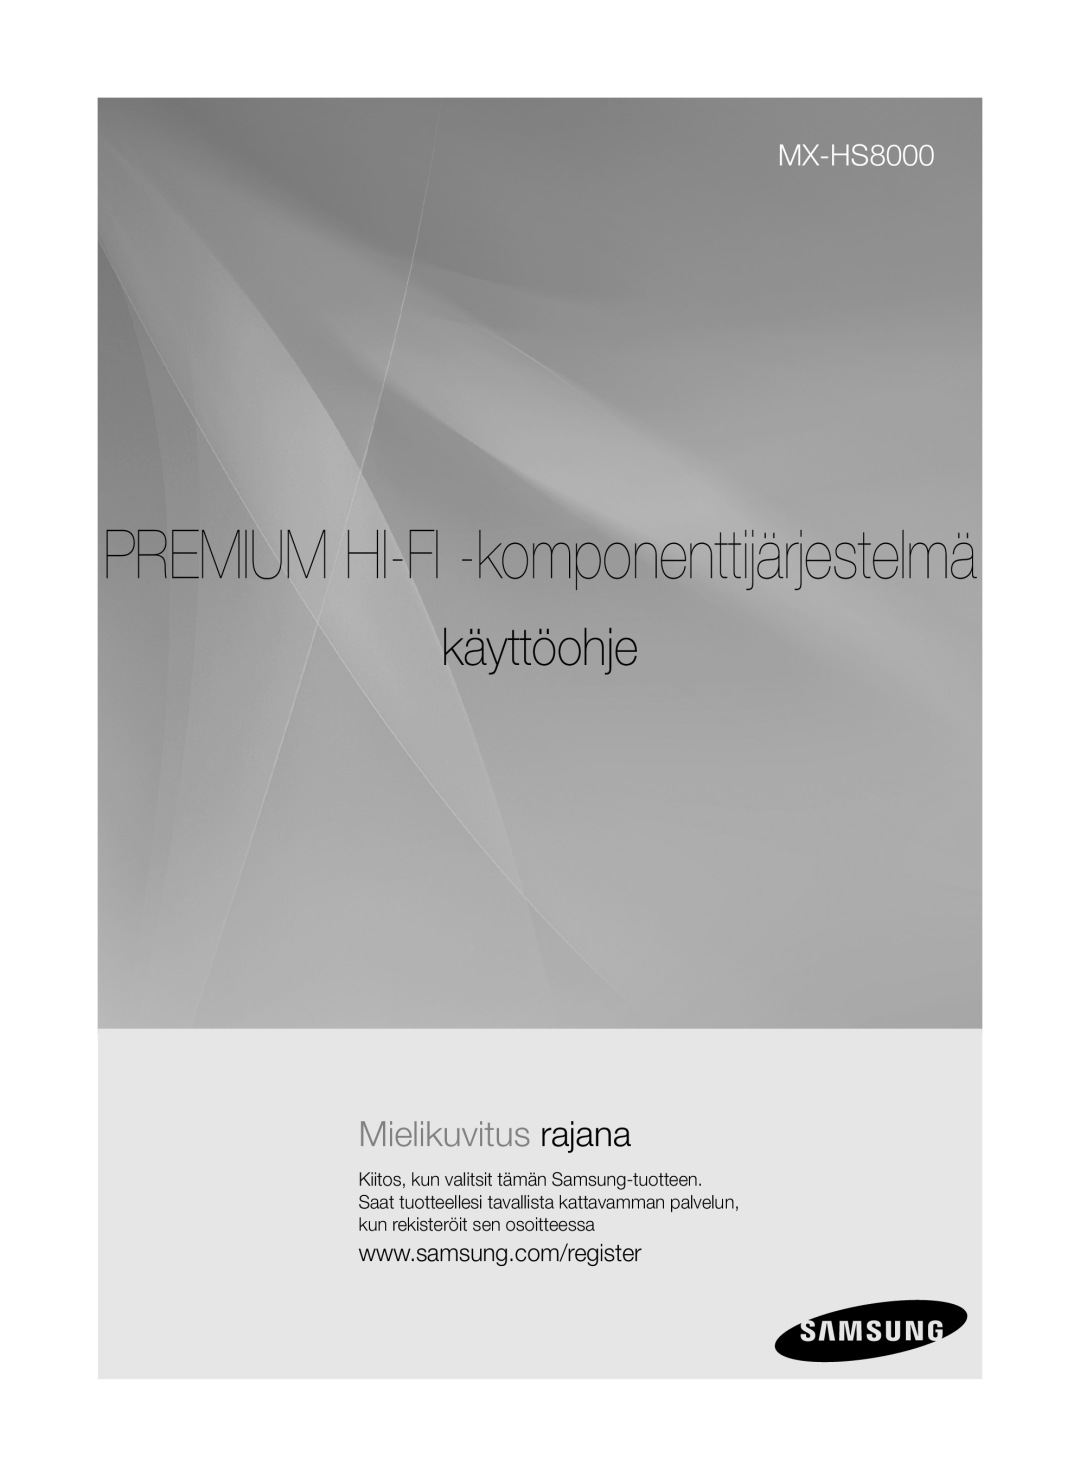 Samsung MX-HS8000/ZF, MX-HS8000/EN manual käyttöohje, Mielikuvitus rajana, PREMIUM HI-FI -komponenttijärjestelmä 